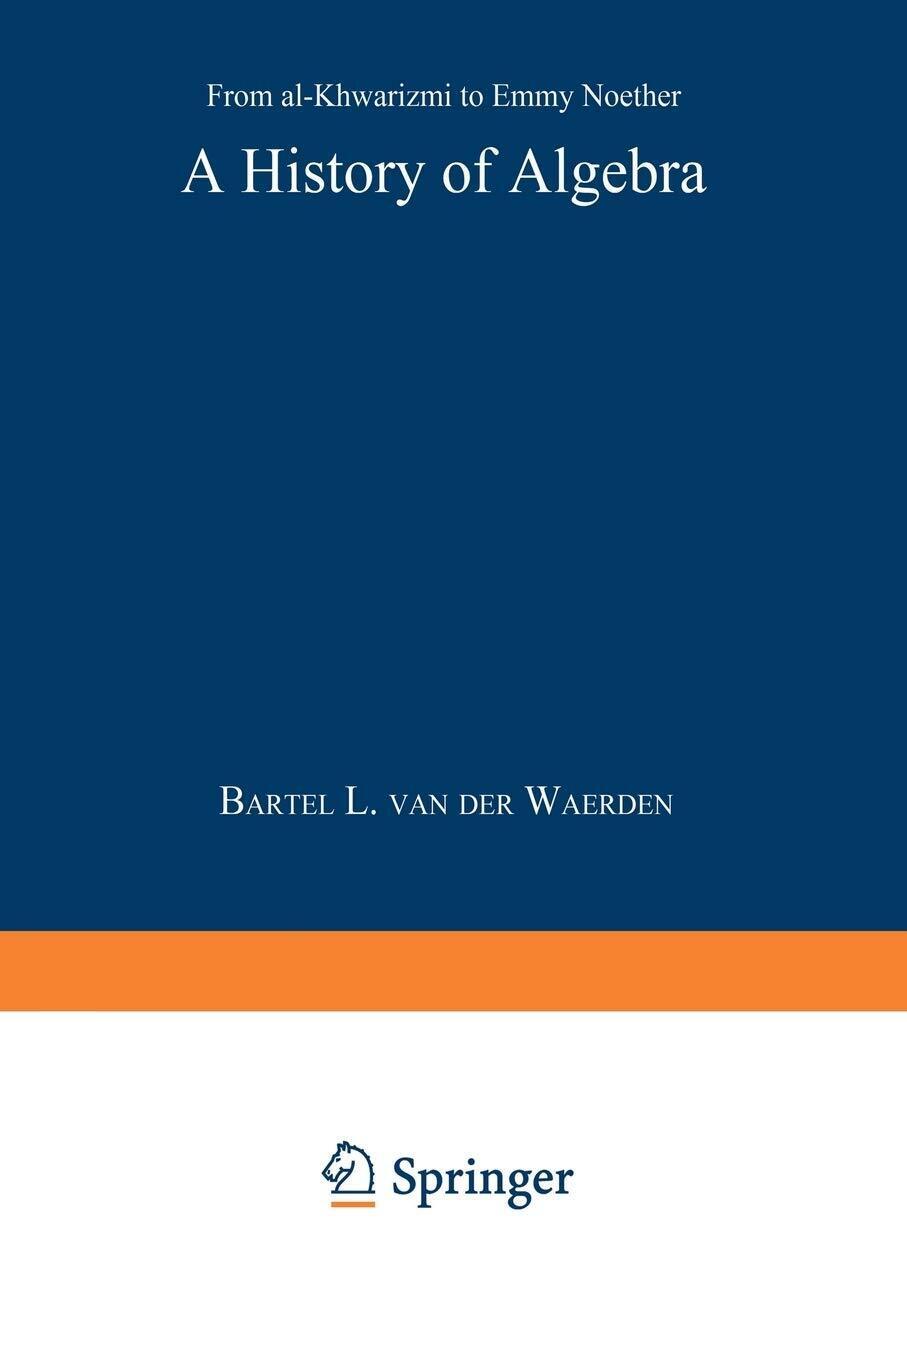 A History of Algebra - Bartel L. Van Der Waerden - Springer, 1985 libro usato